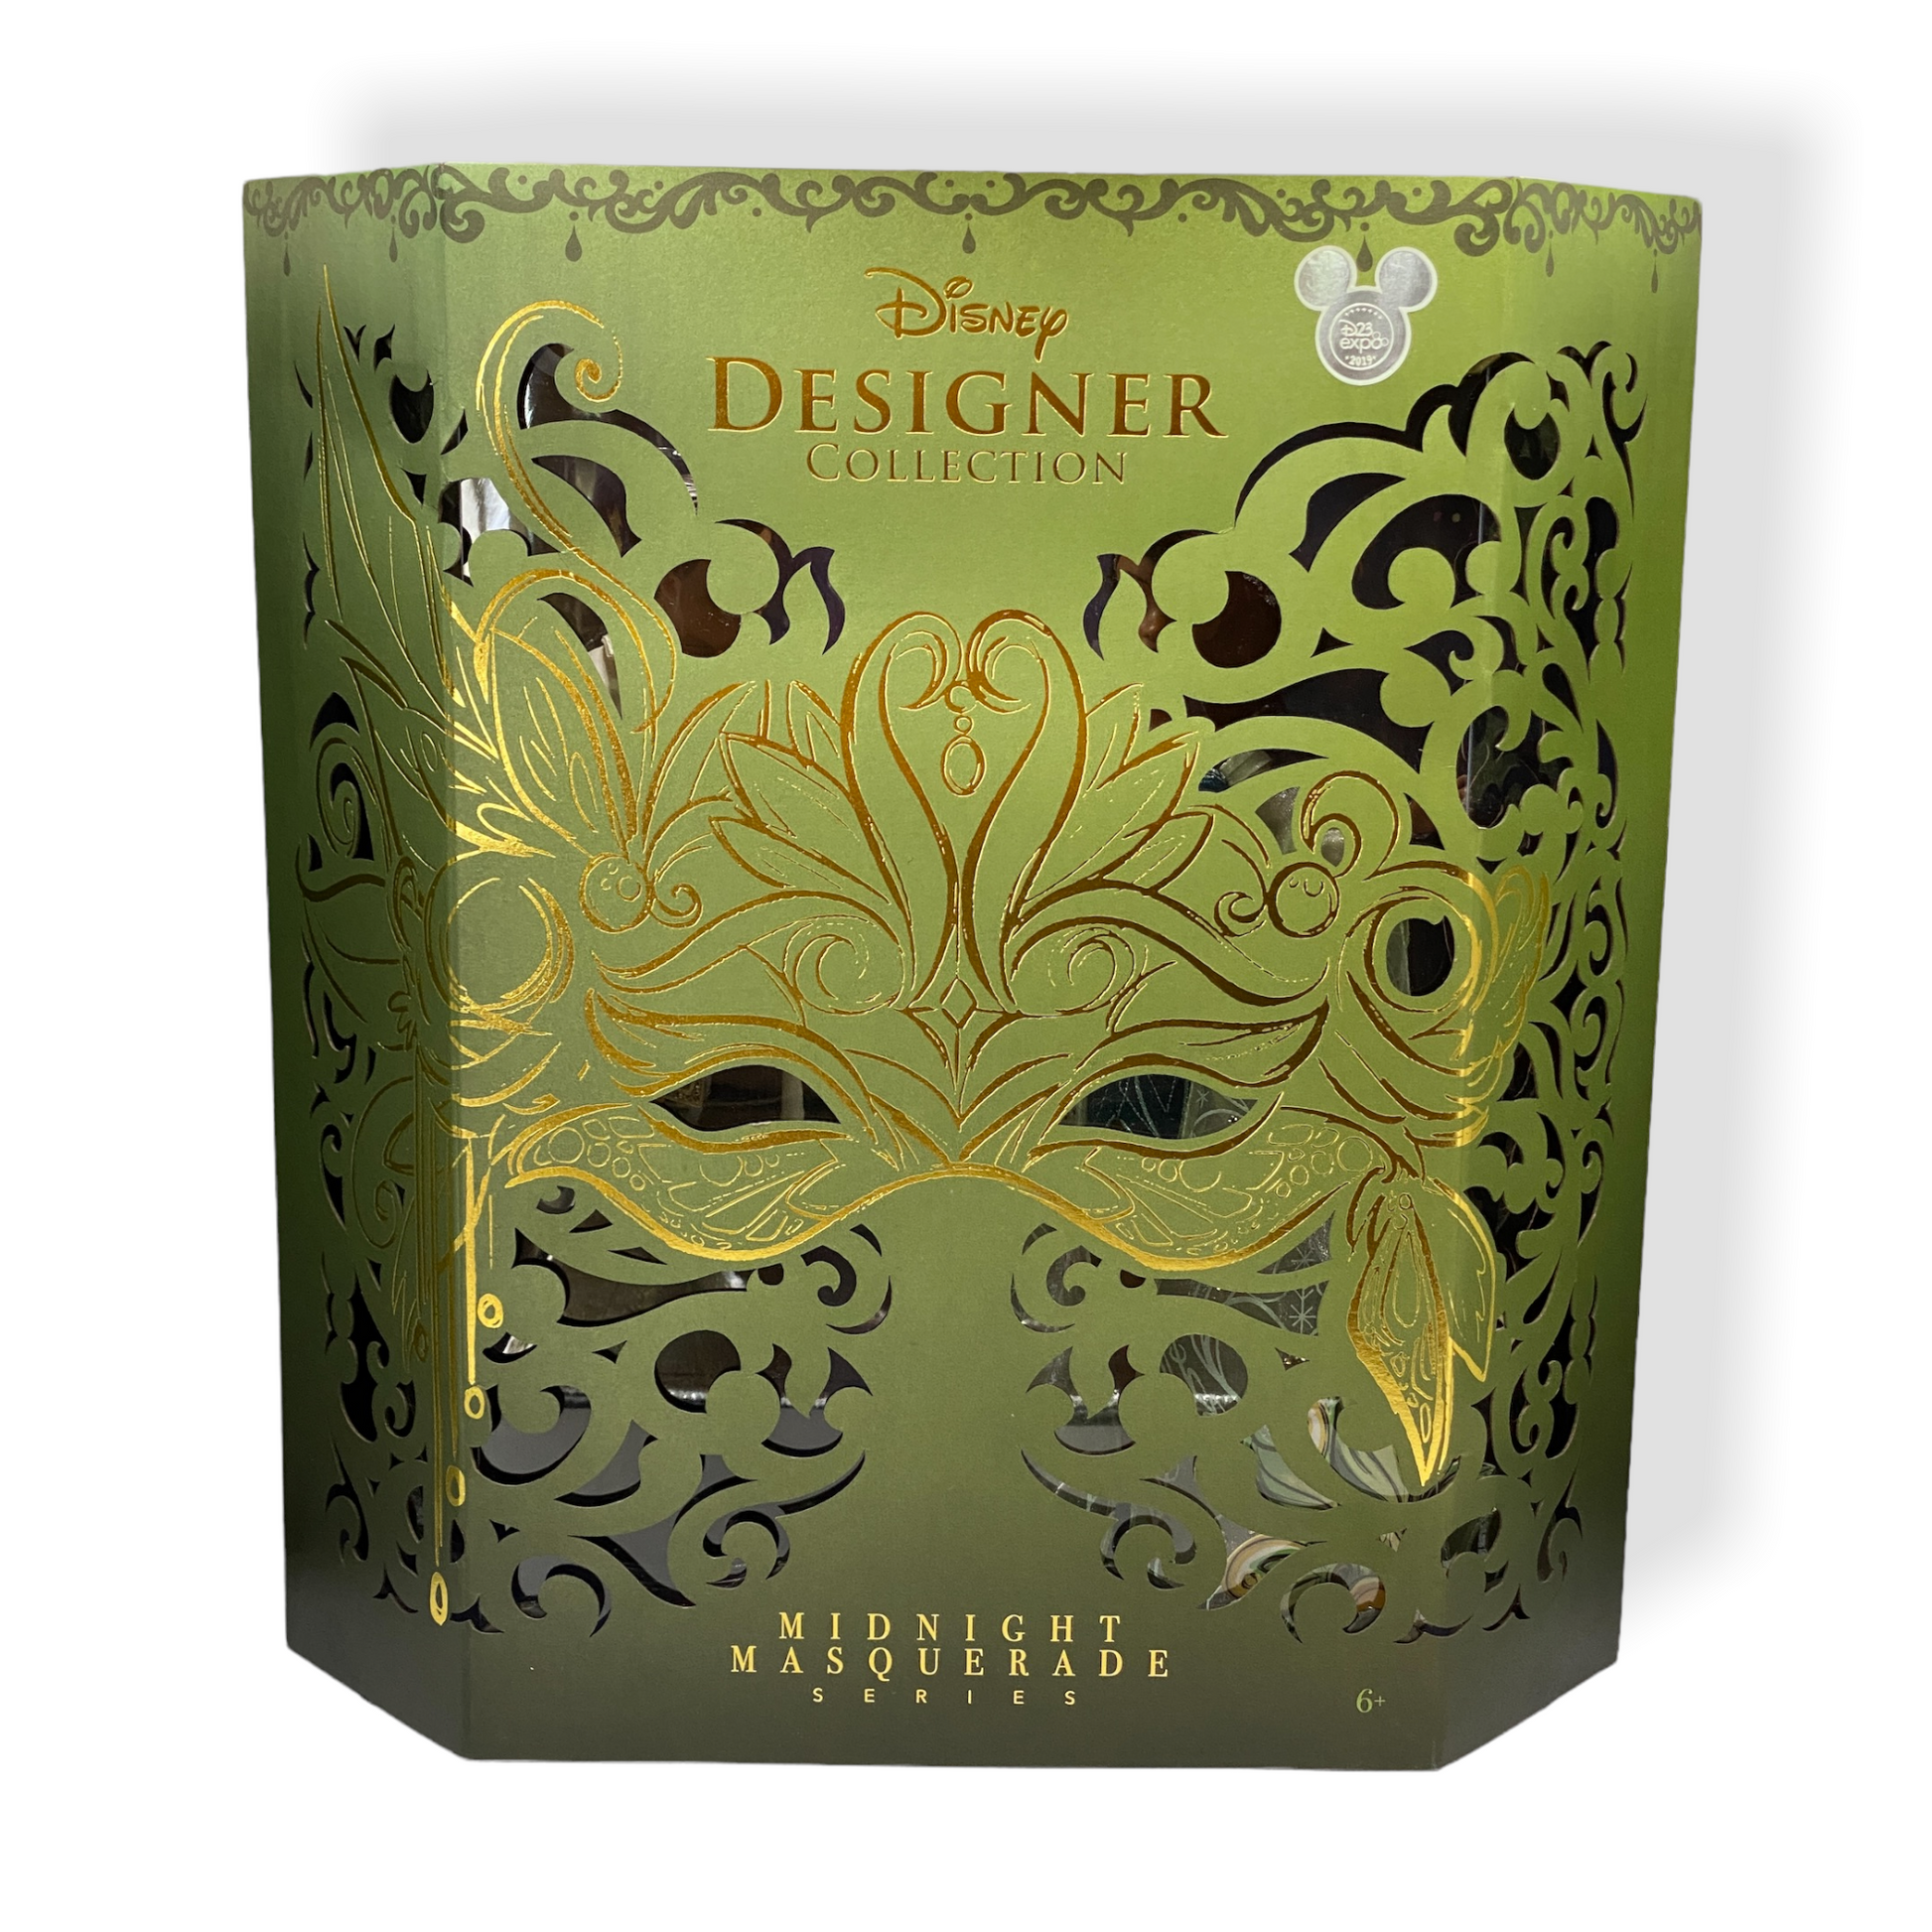 Designer Collection Midnight Masquerade Series Tiana & Naveen Doll Set